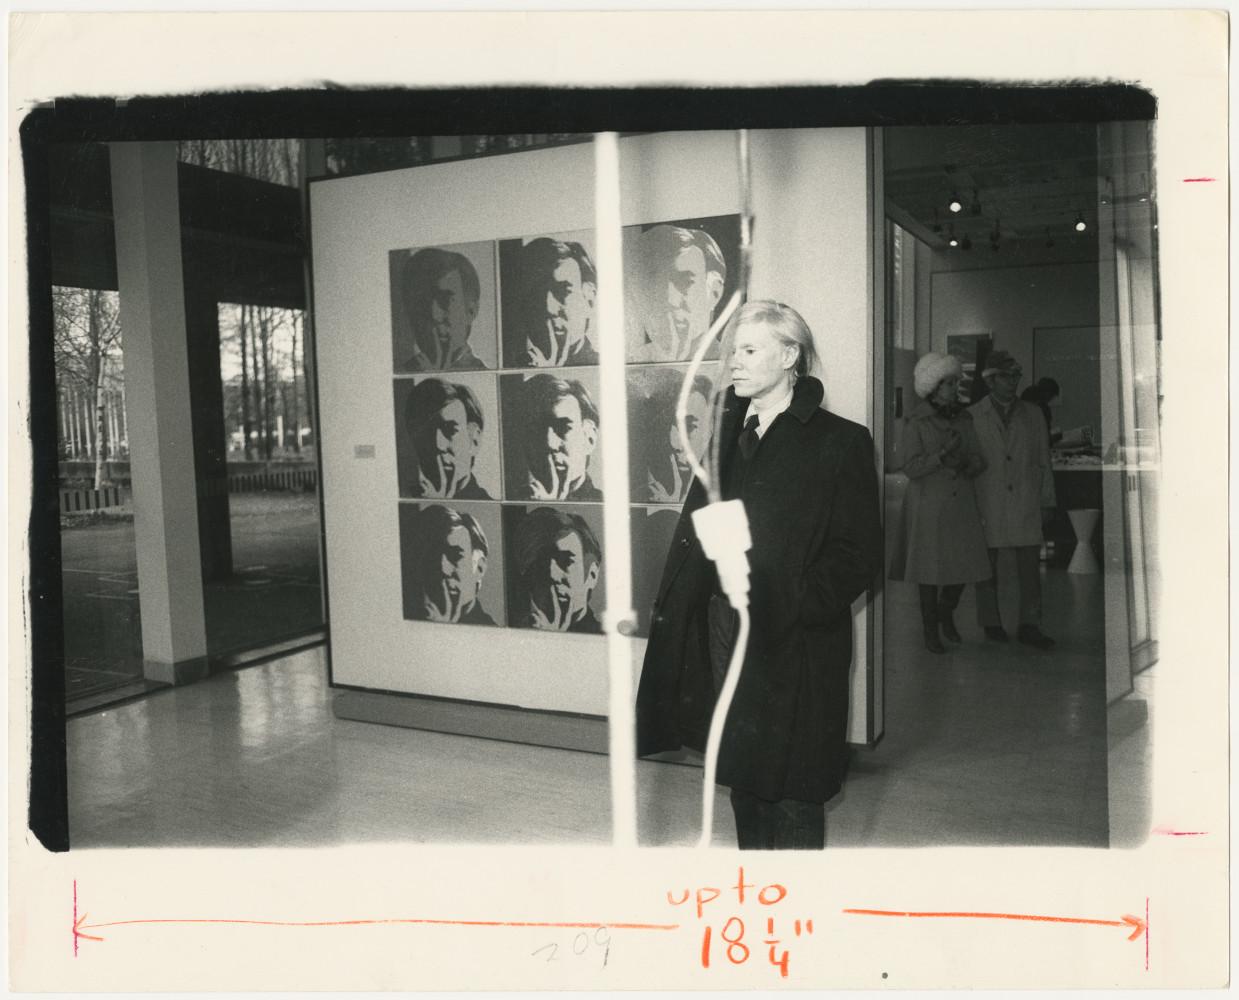 Bob Colacello Portrait Photograph - Photo of Andy Warhol taken at his Frankfurt exhibition